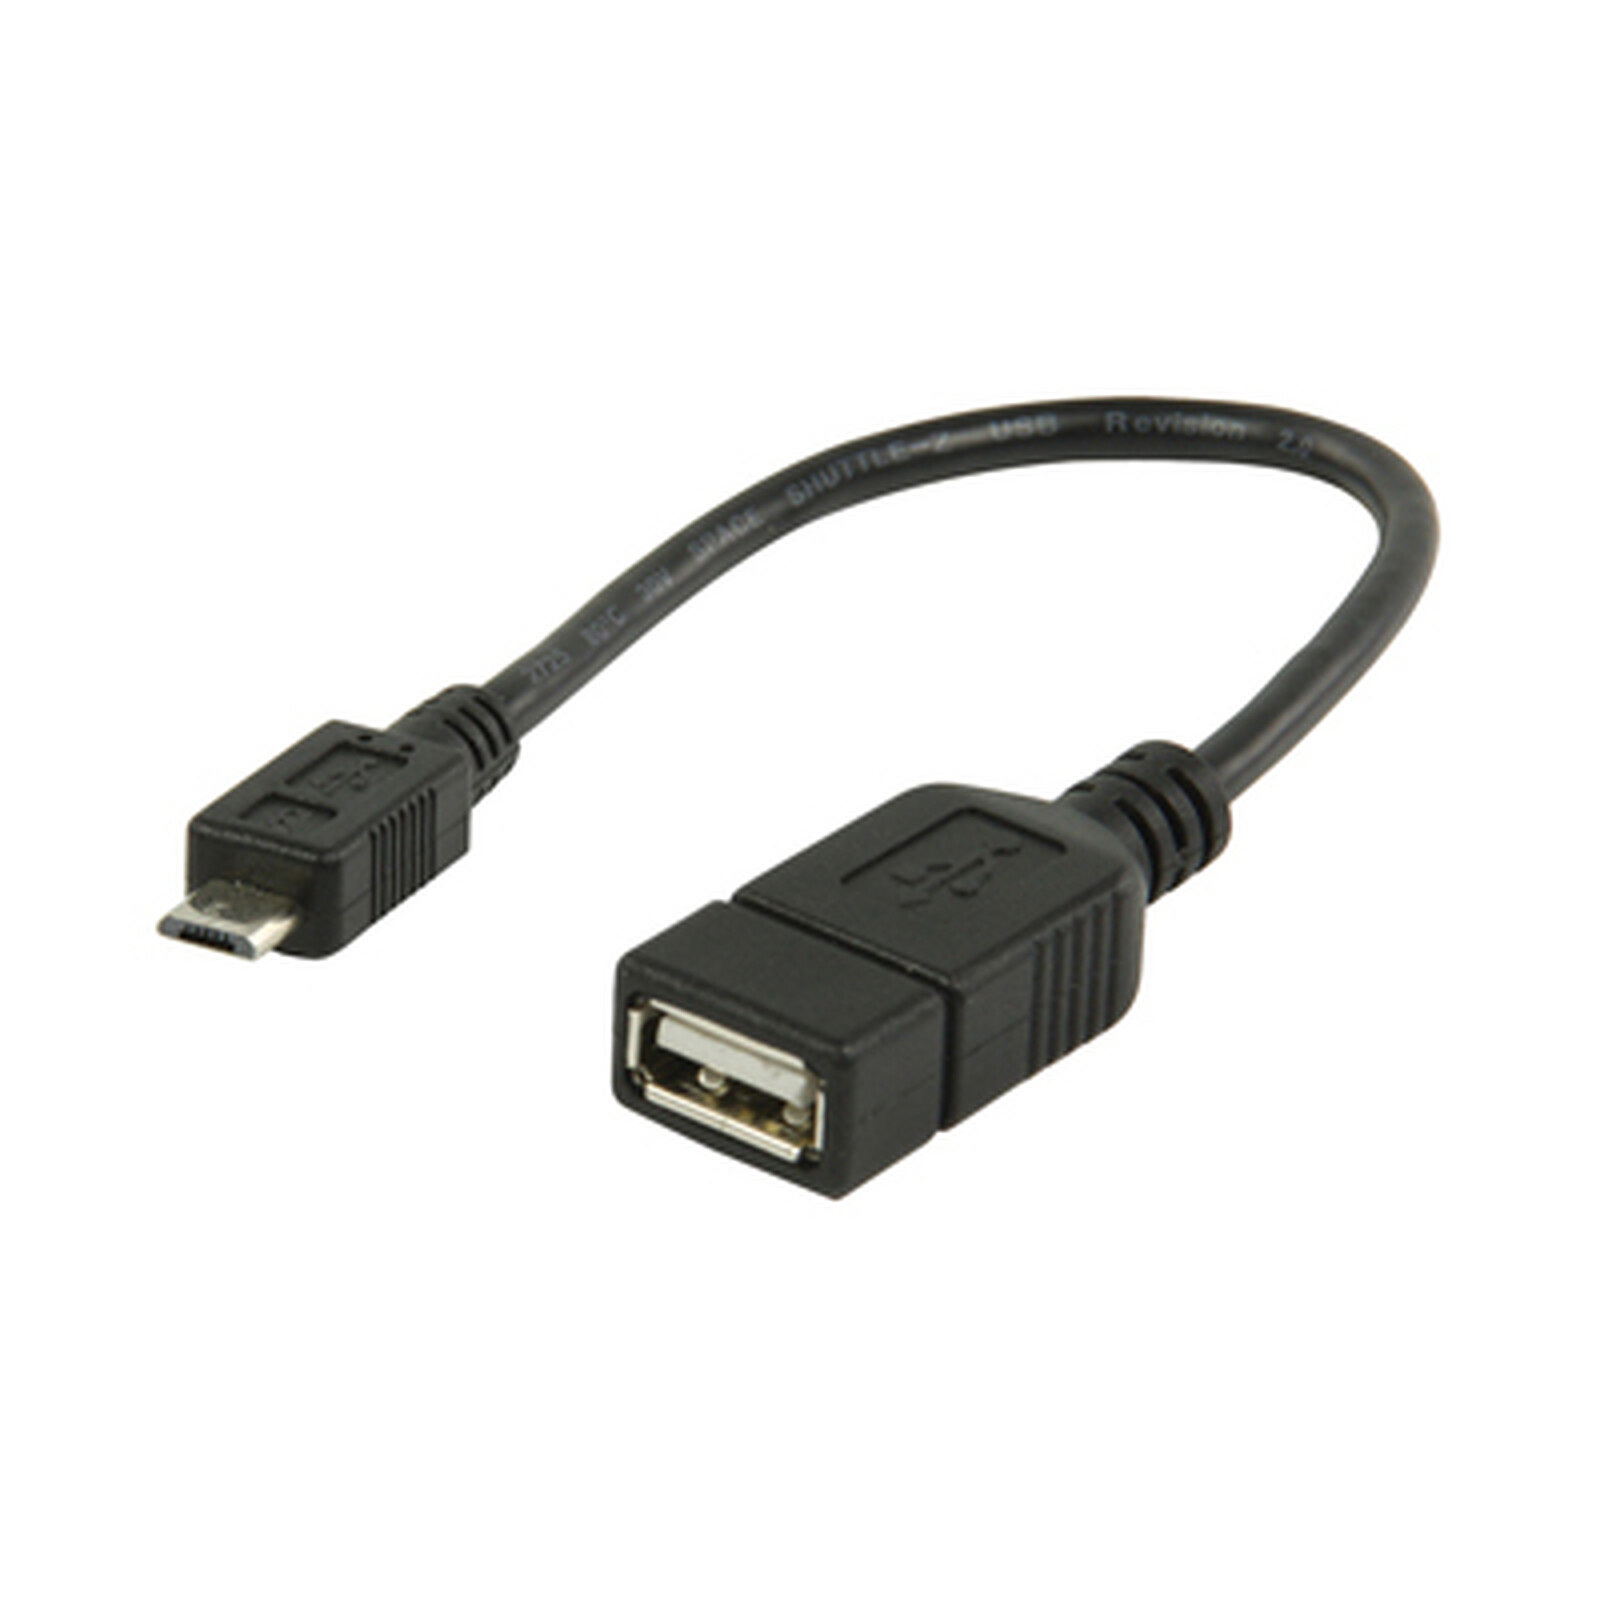 4x alta velocidad OTG adaptador cable Micro USB a USB a B para Smartphone Android schw 